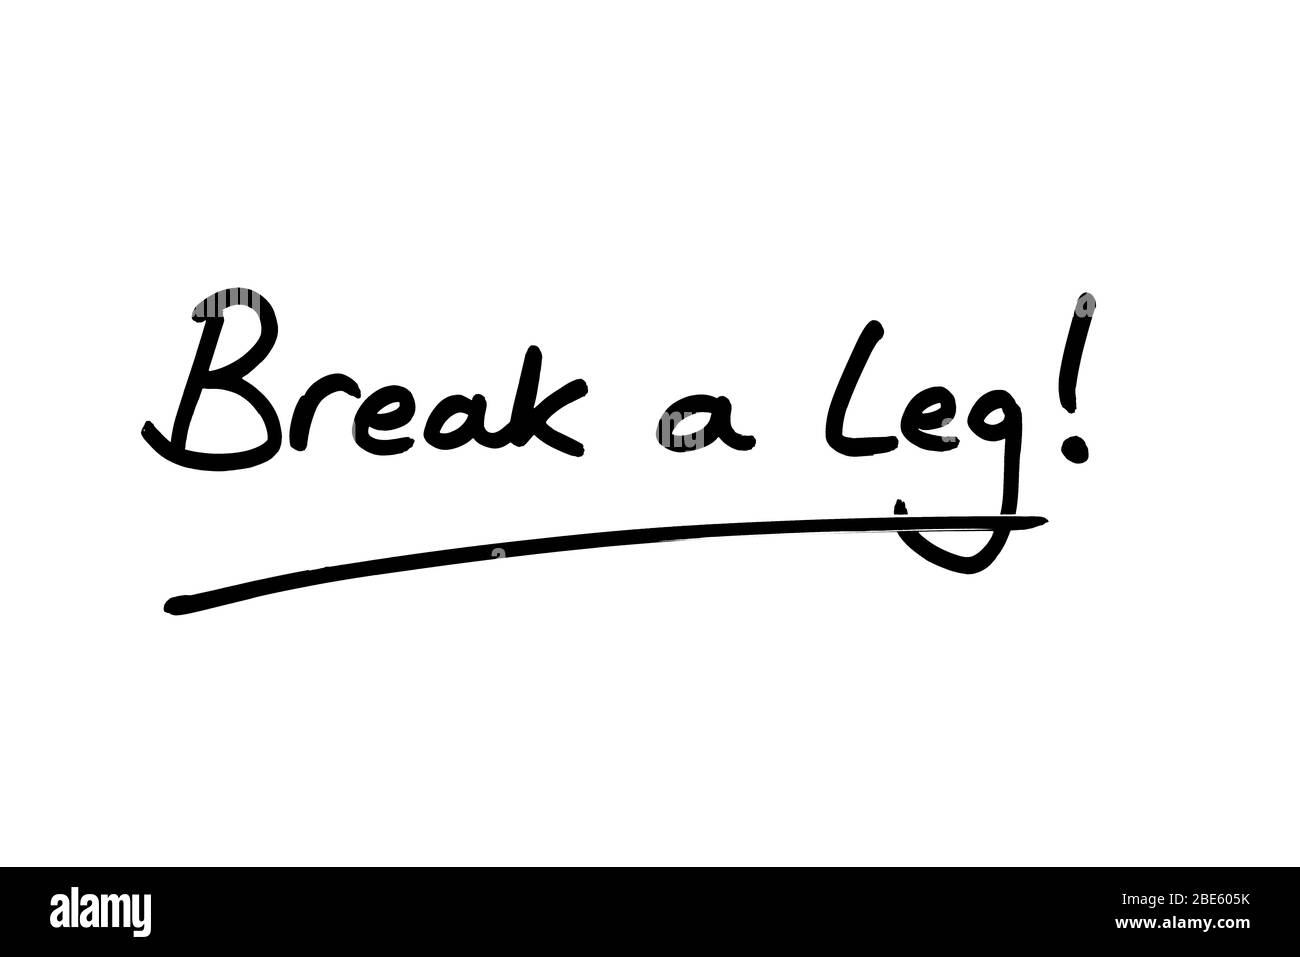 Break a Leg! handwritten on a white background. Stock Photo